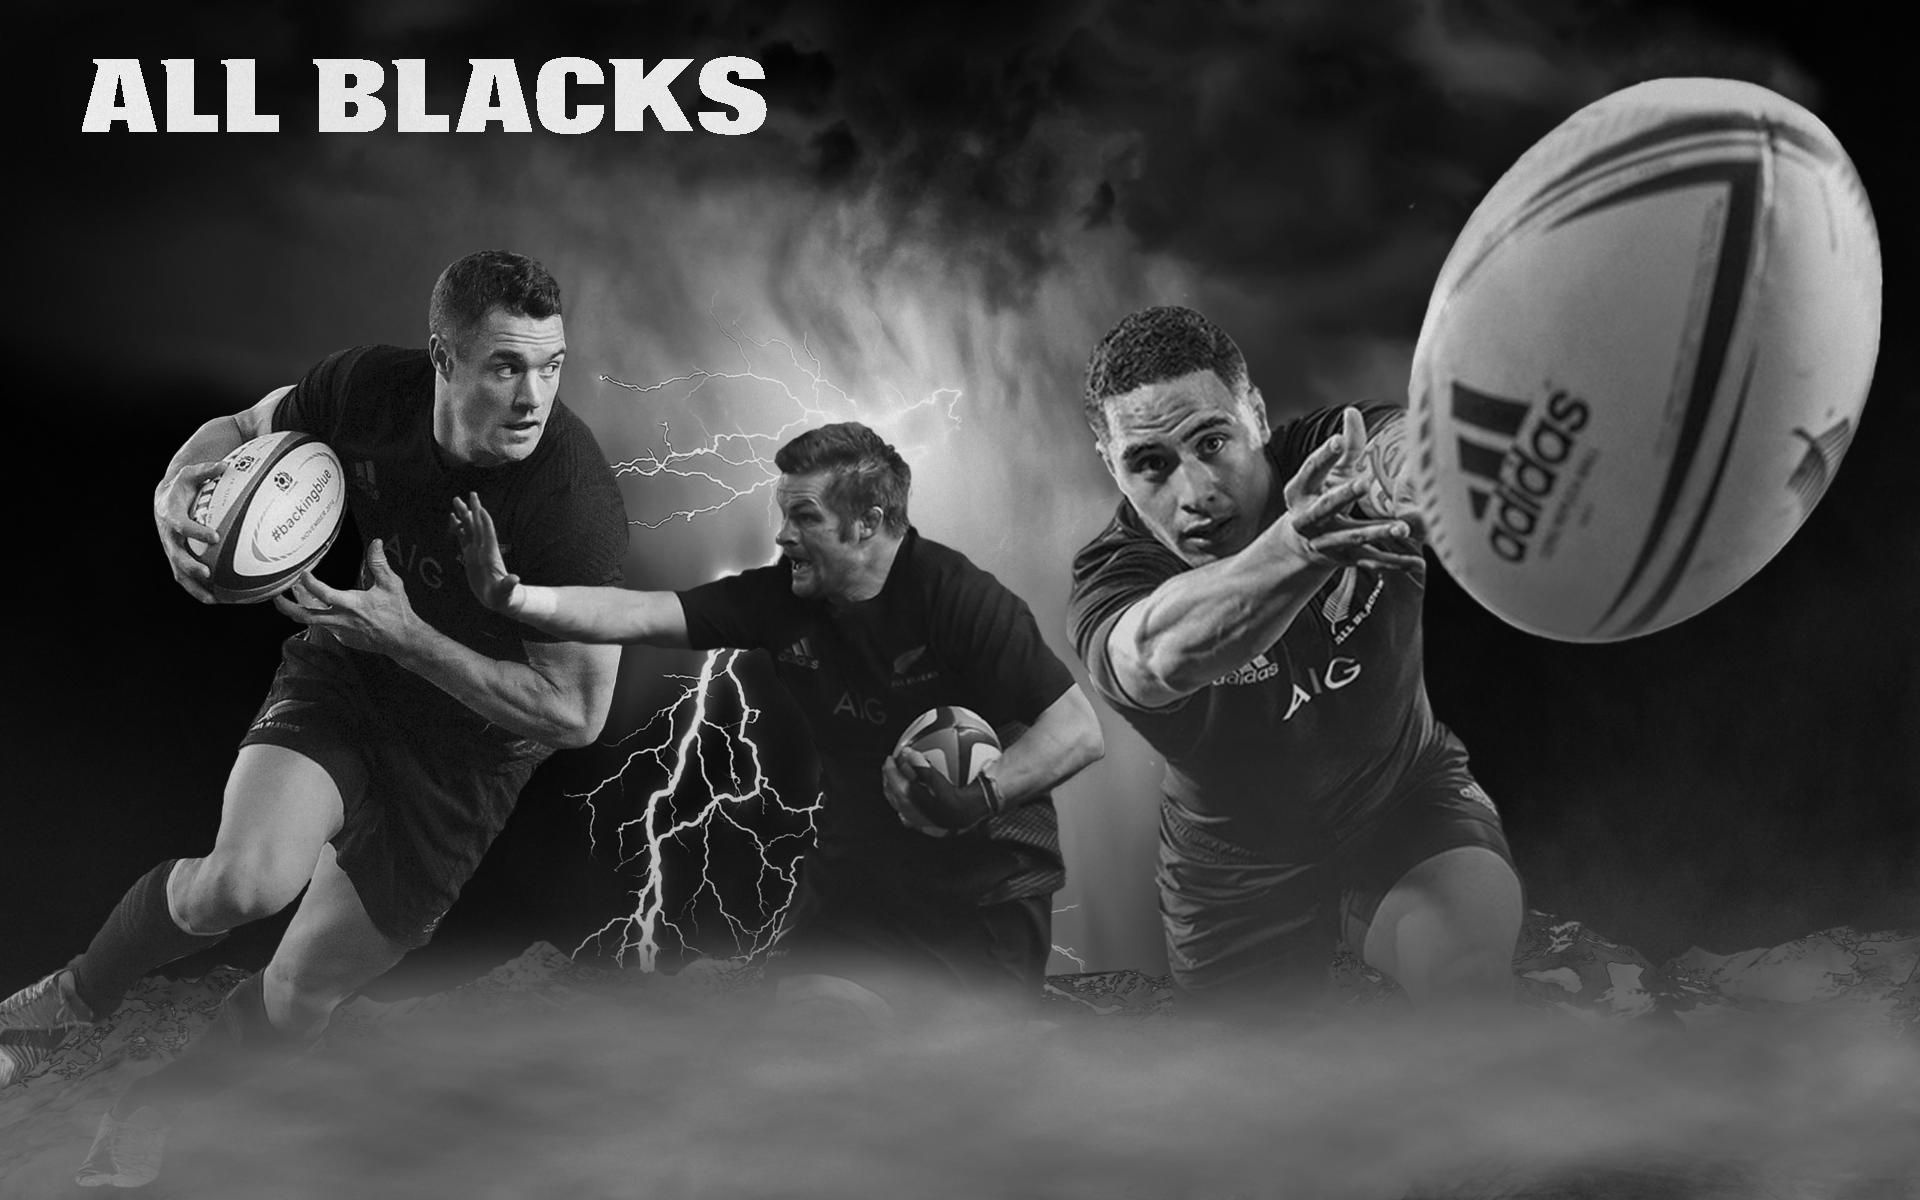 Rugby League: The All Blacks - The New Zealand national union team, Monochrome fan art. 1920x1200 HD Wallpaper.